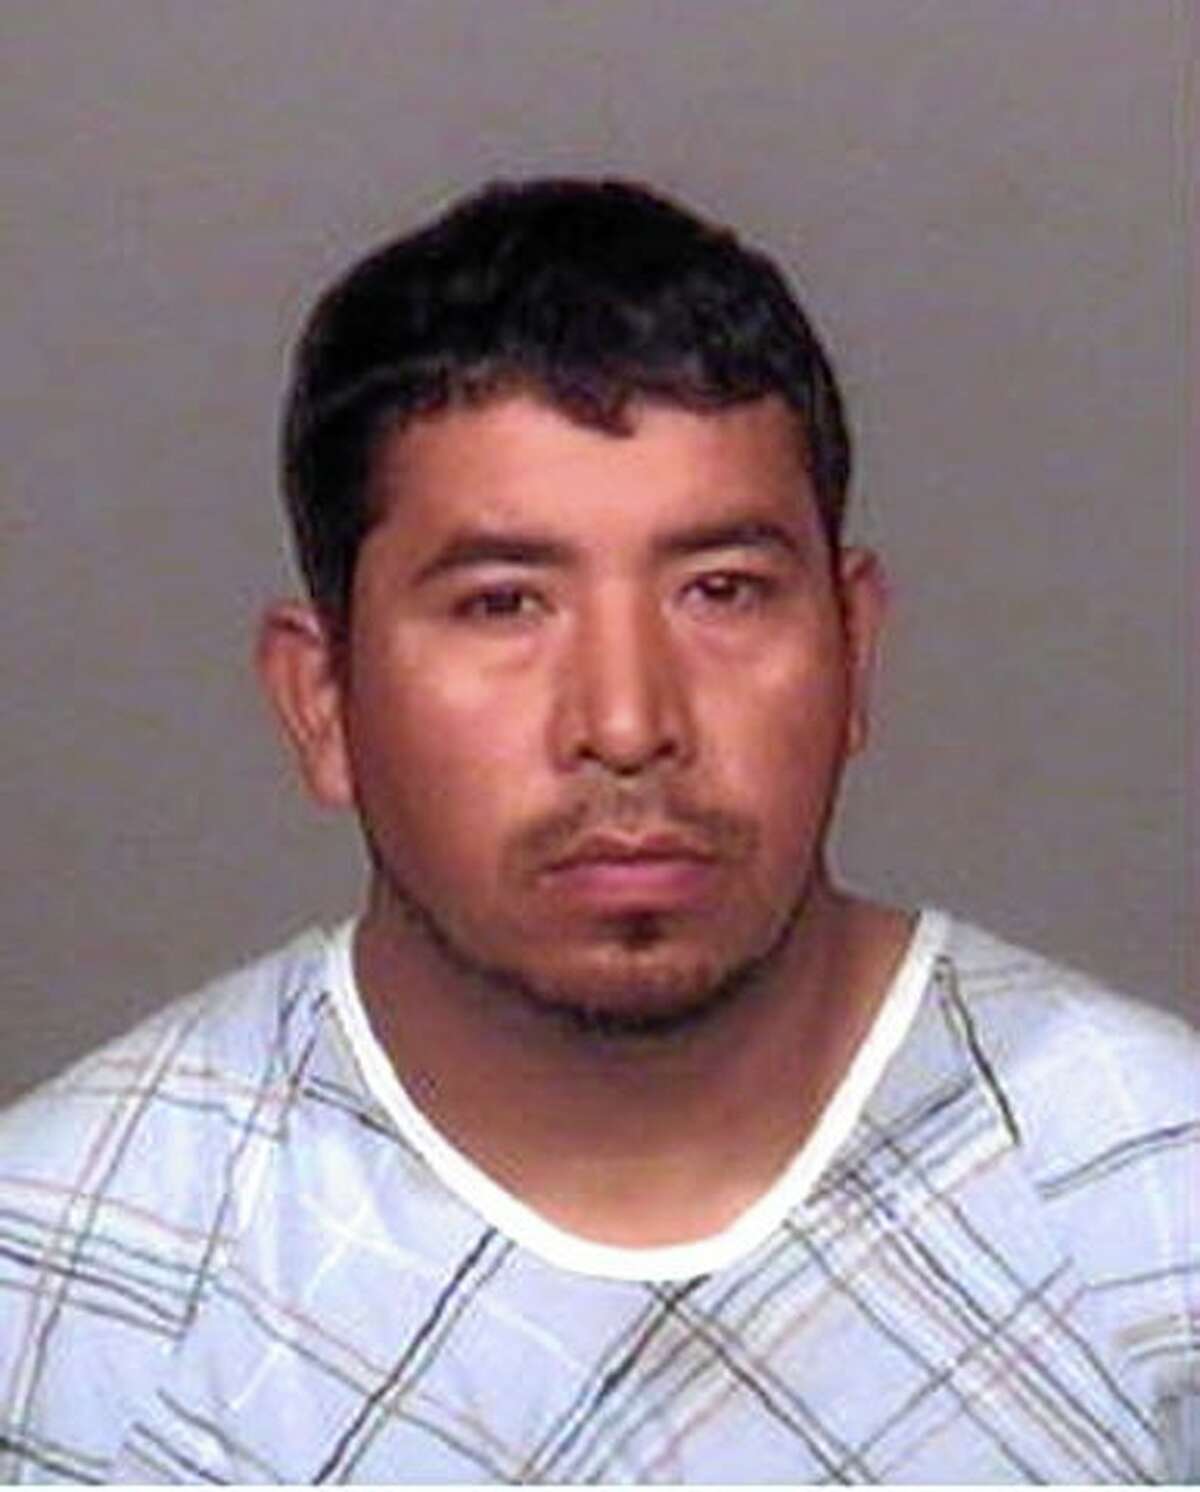 Israel Gonzalez ,of Meriden, is seen in an undated photo provided by the Meriden Police Department.